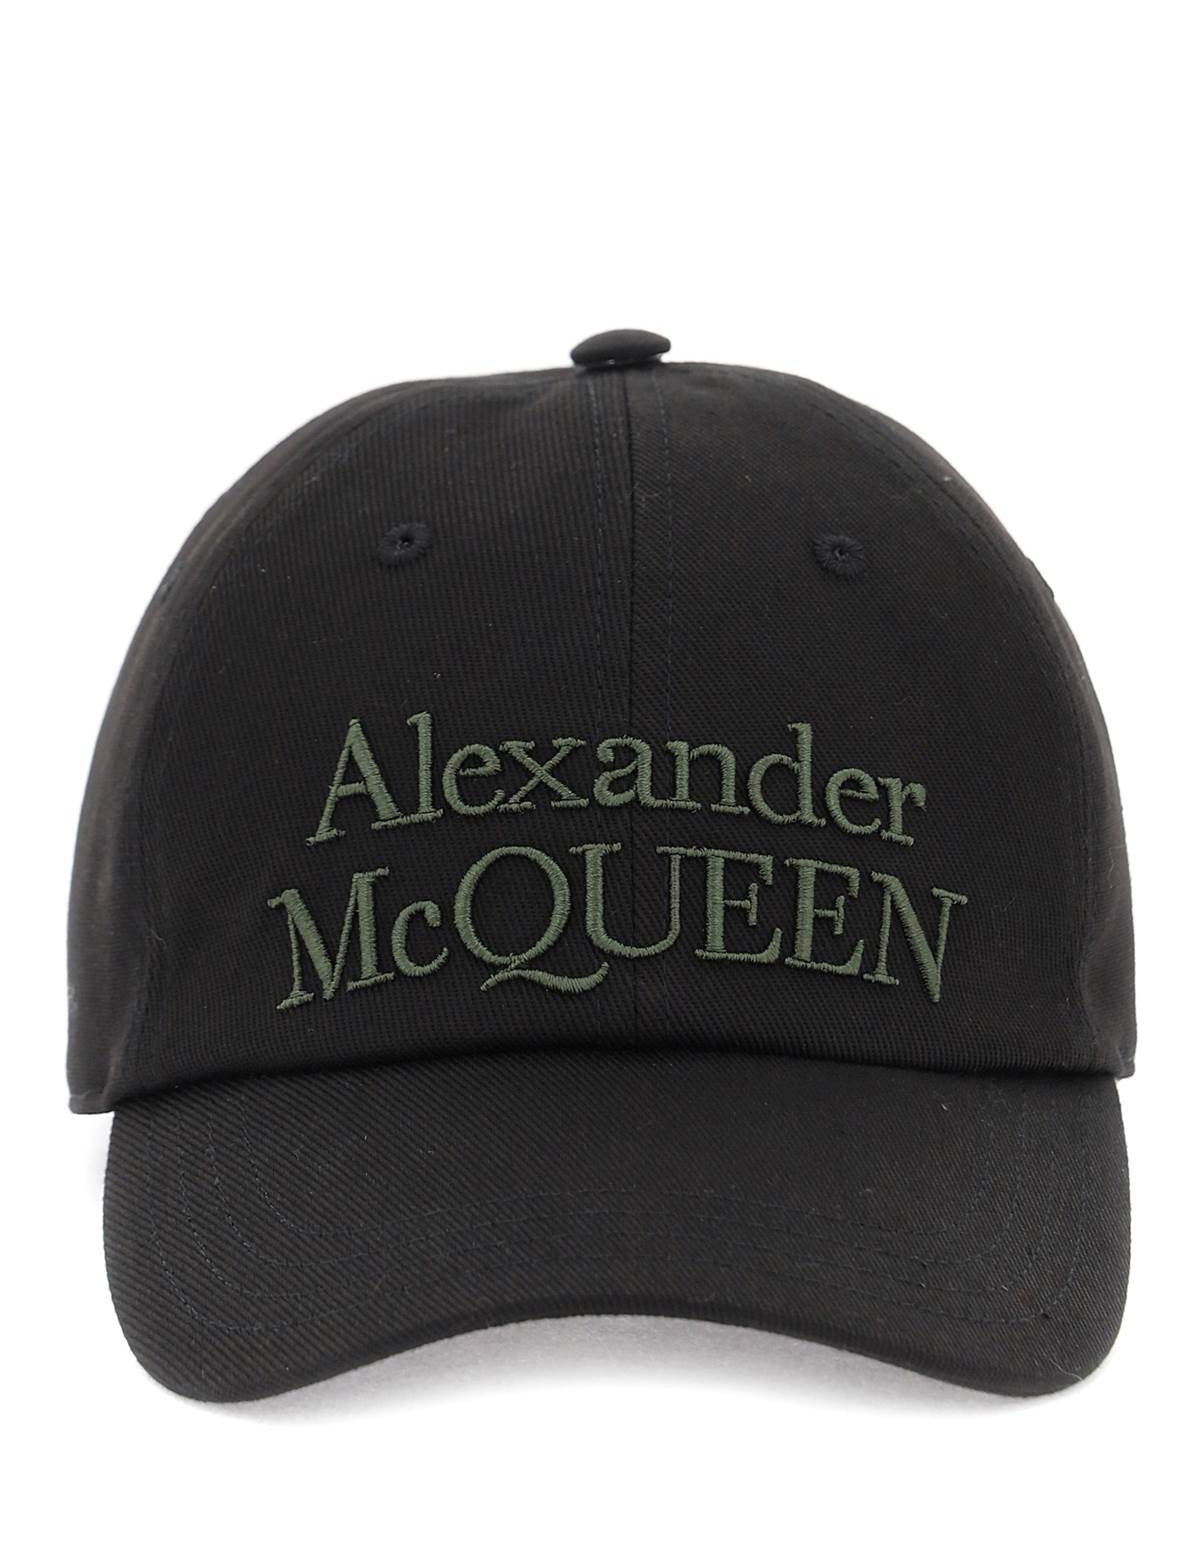 alexander-mcqueen-baseball-cap-with-embroidered-logo.jpg